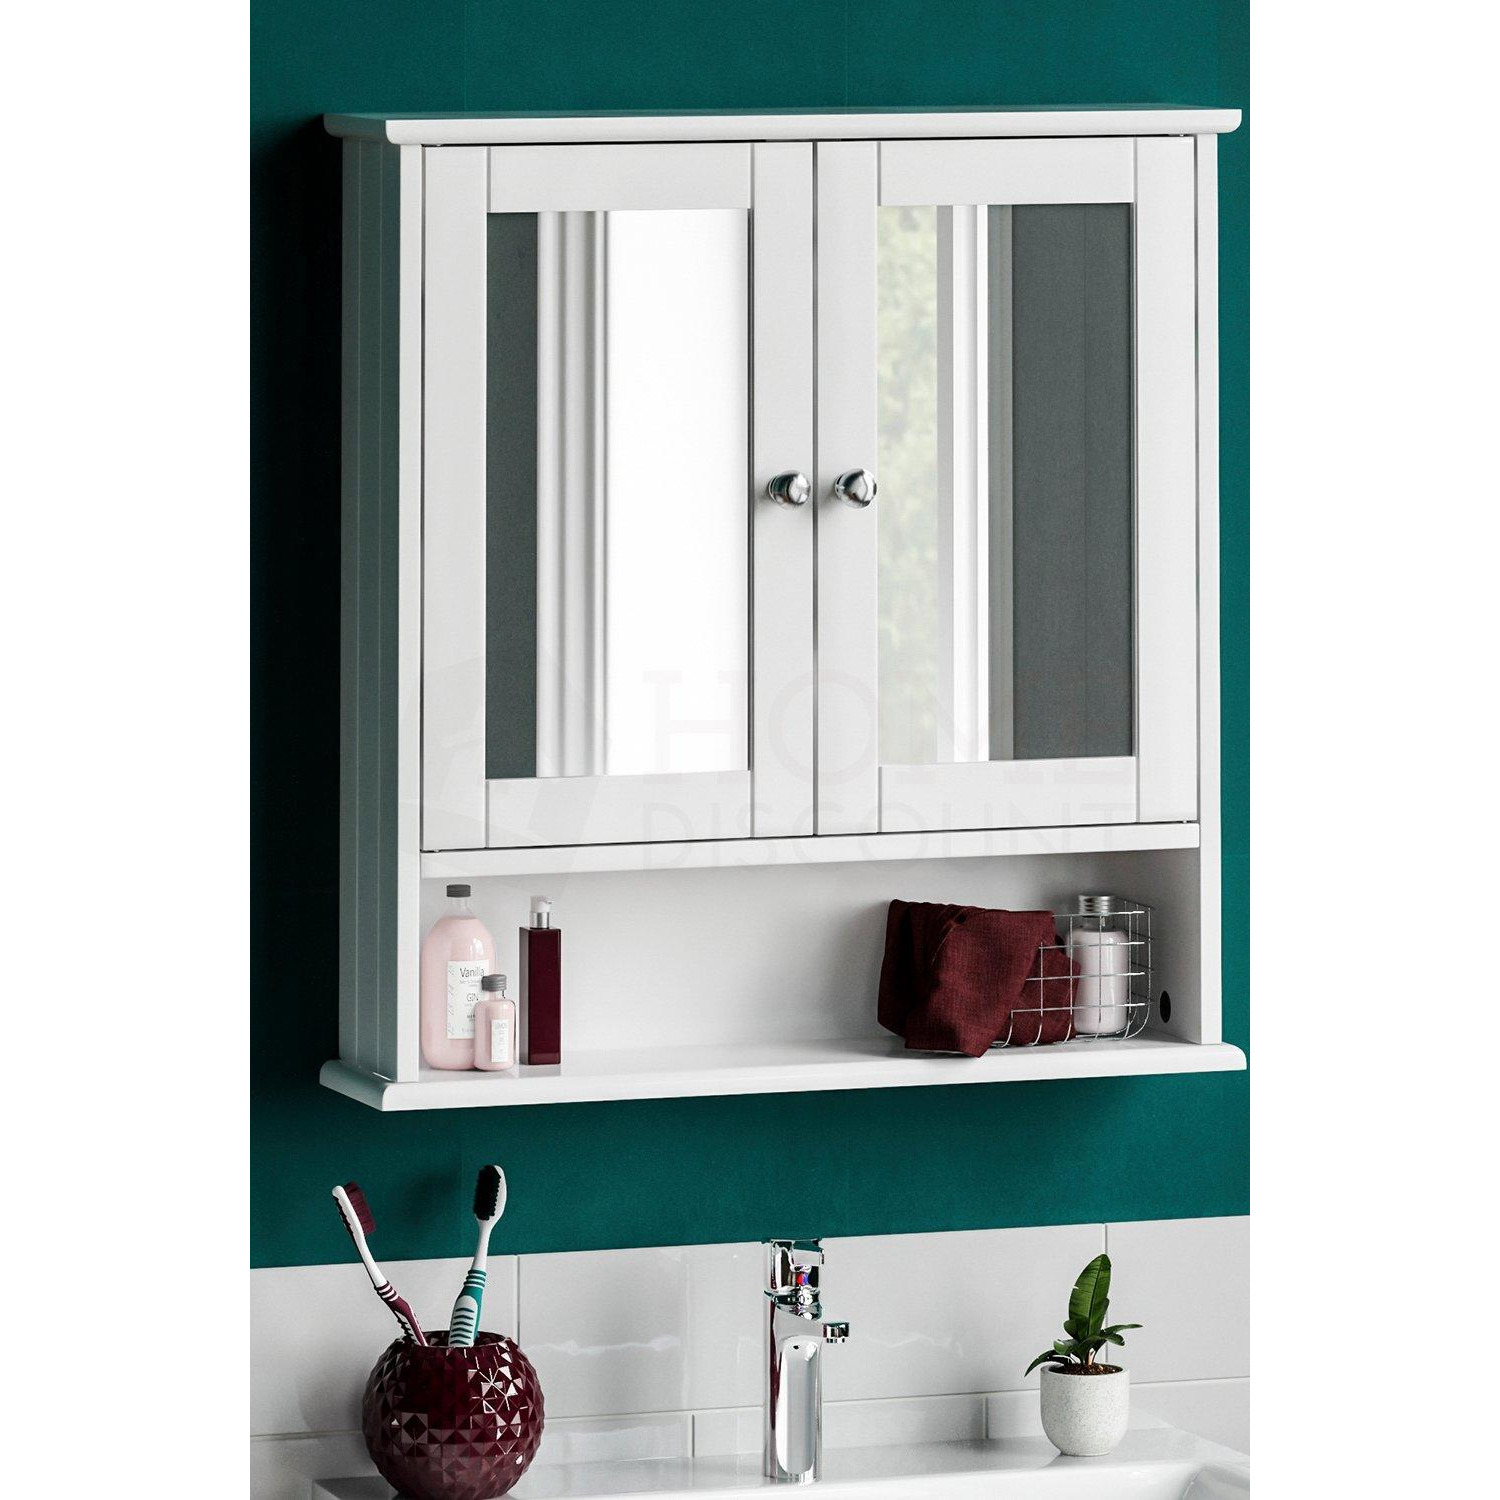 Bath Vida Priano 2 Door Mirrored Wall Cabinet With Shelf Storage Bathroom Furniture 580 x 560 x 130 mm - image 1